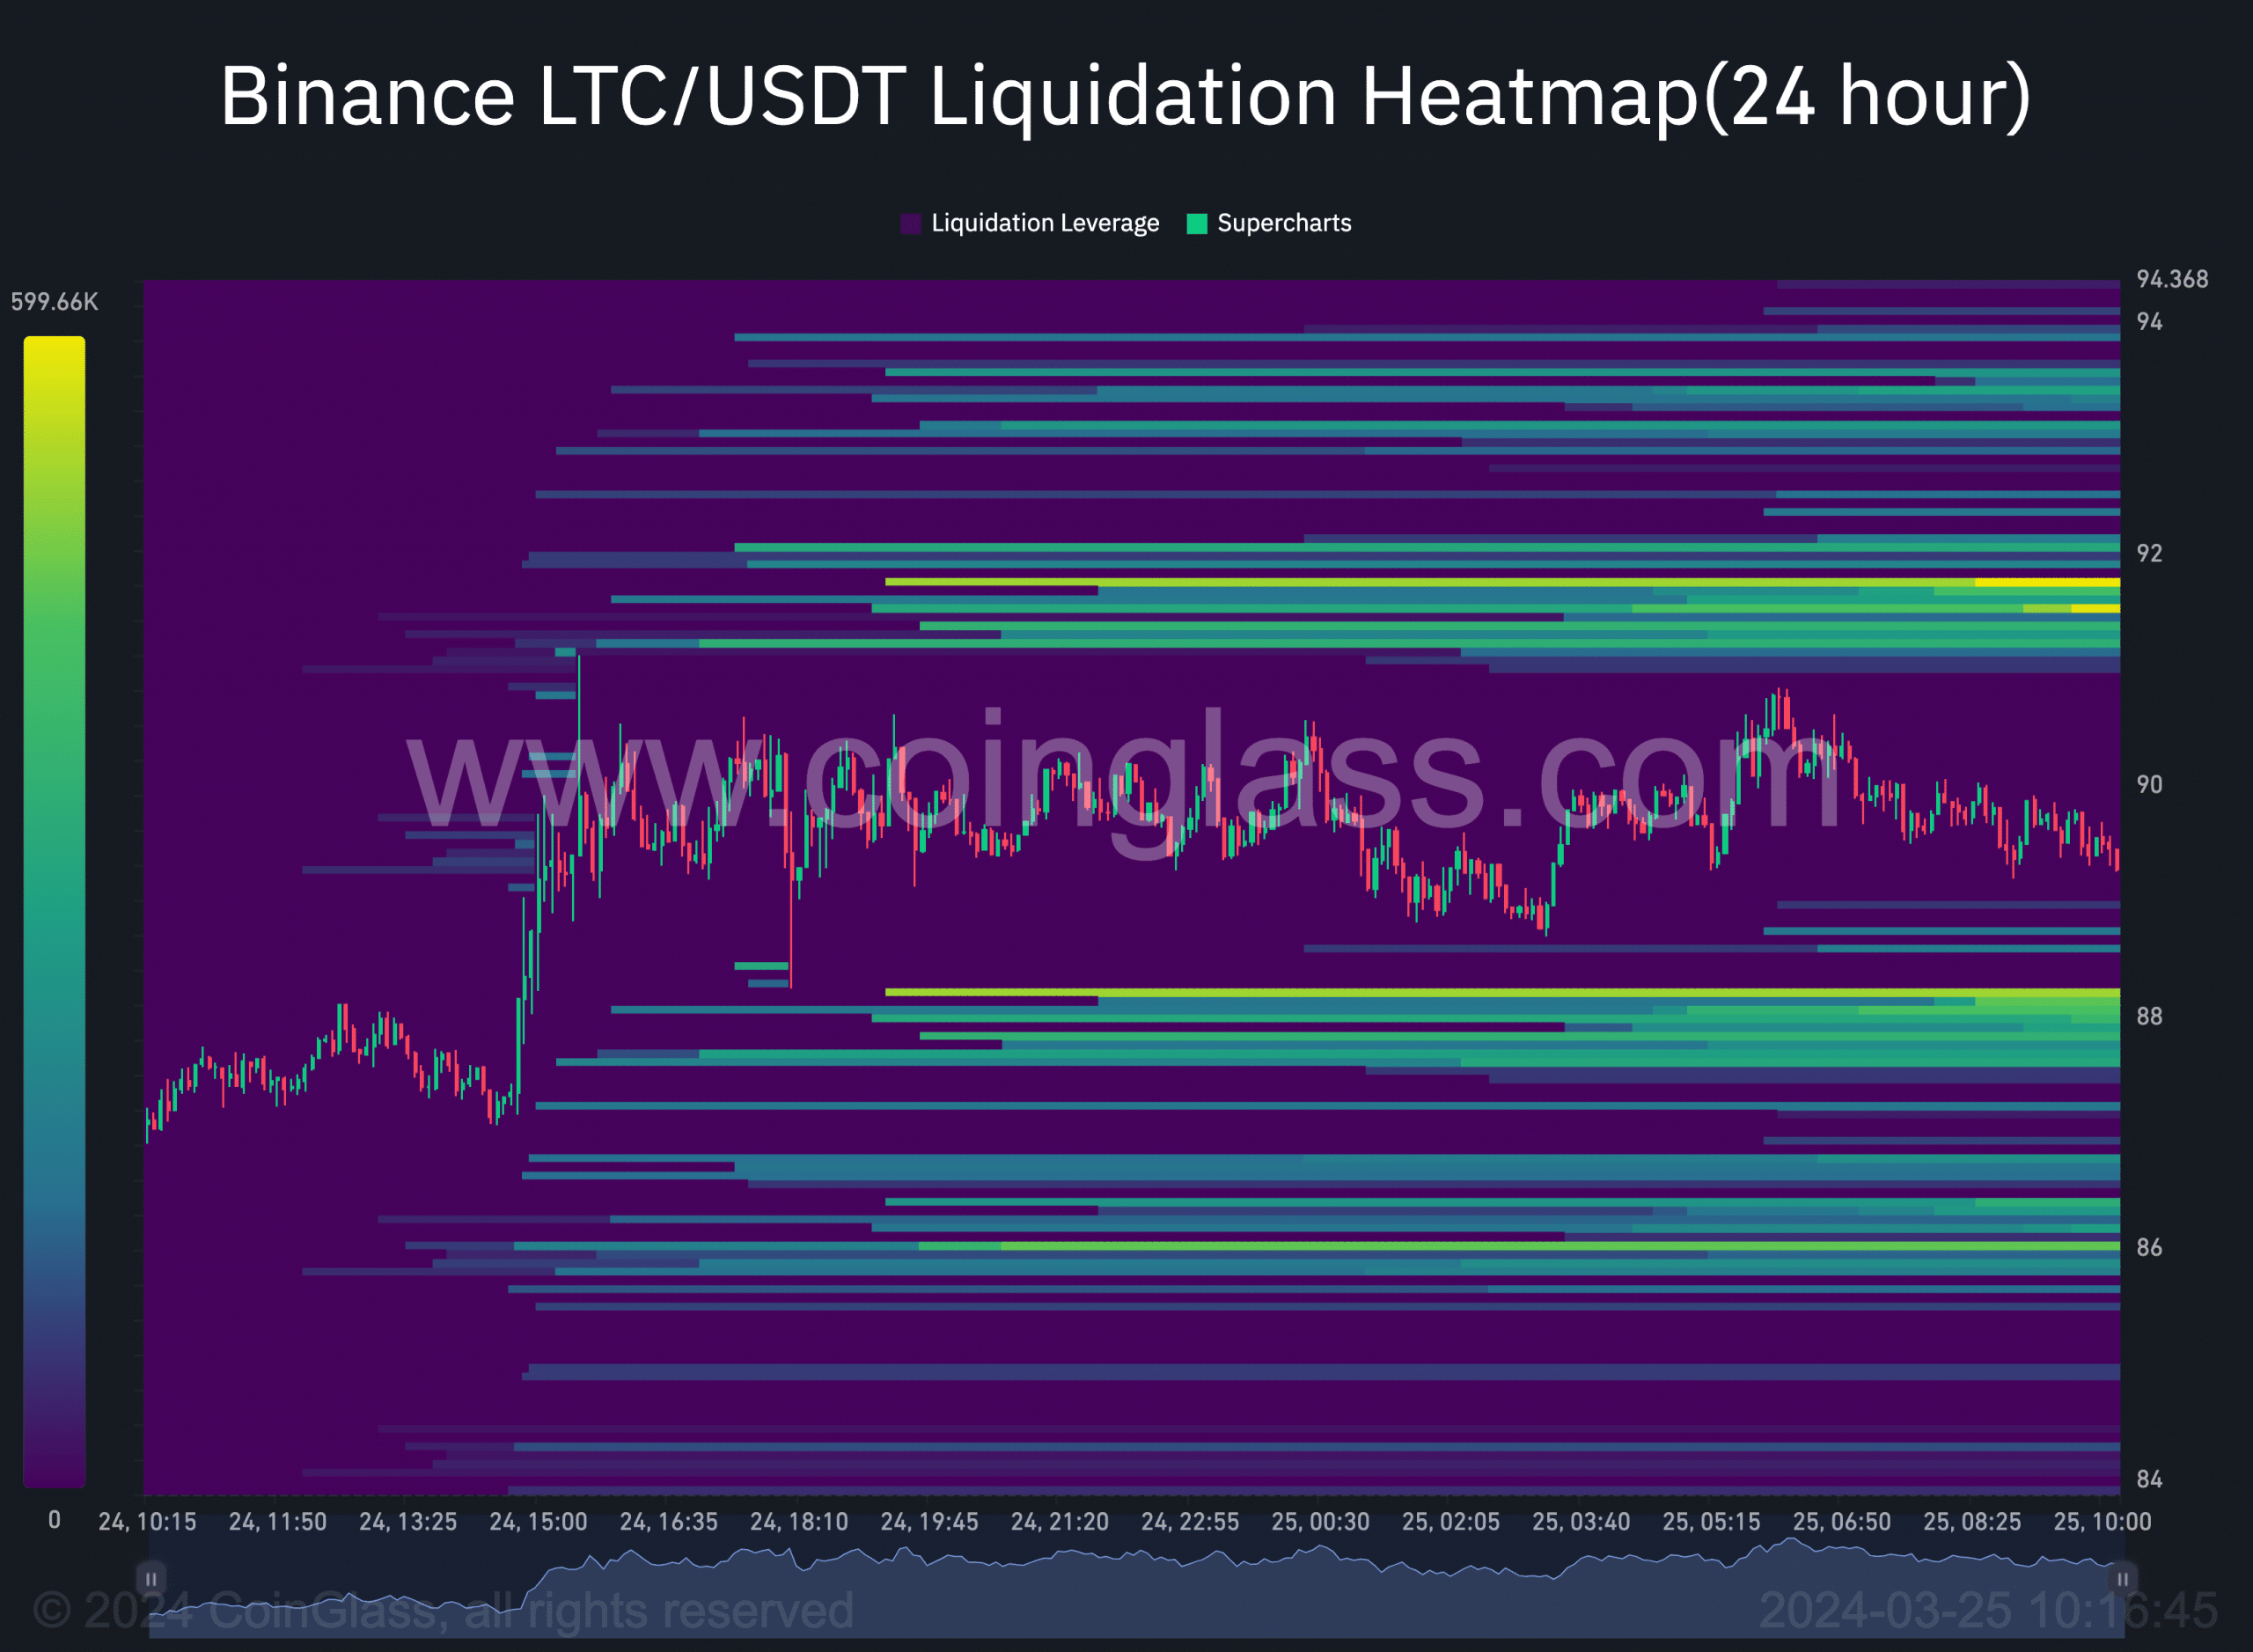 Litecoin liquidation heatmap